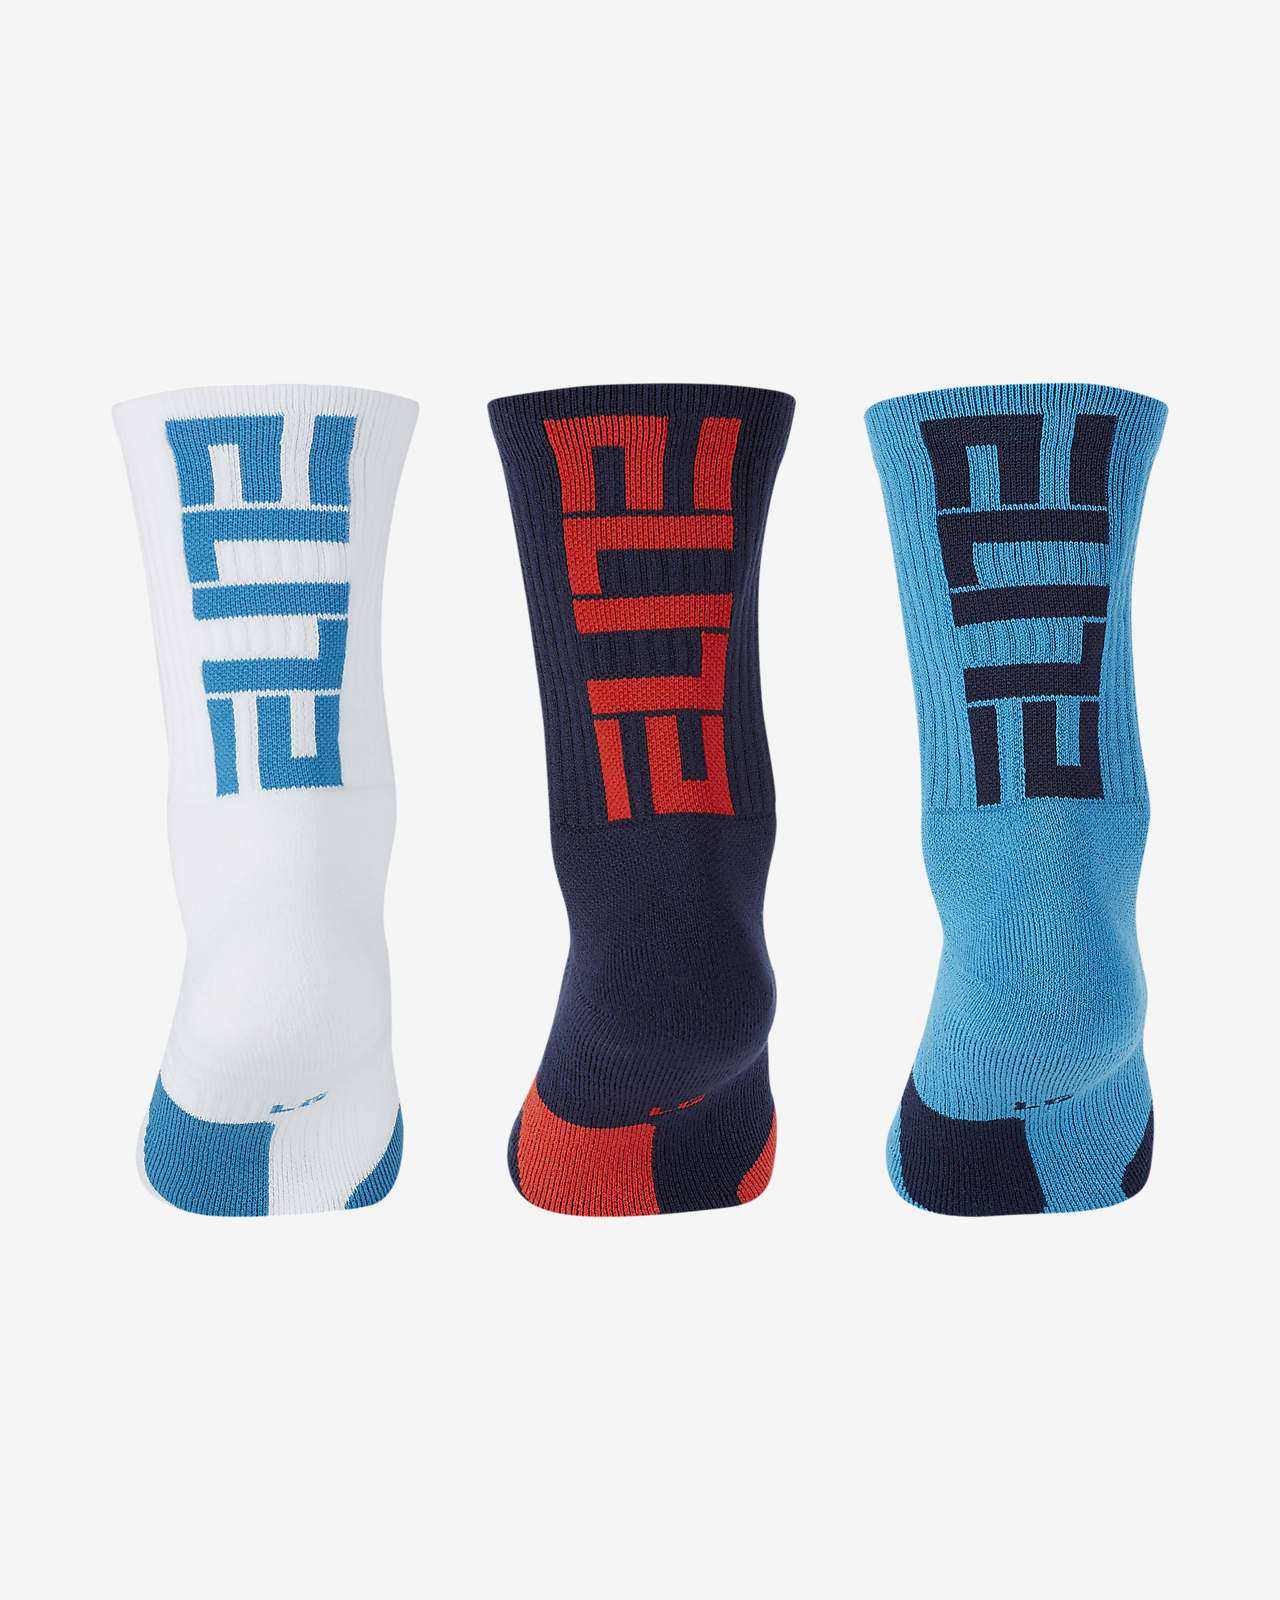 nike elite socks cheap